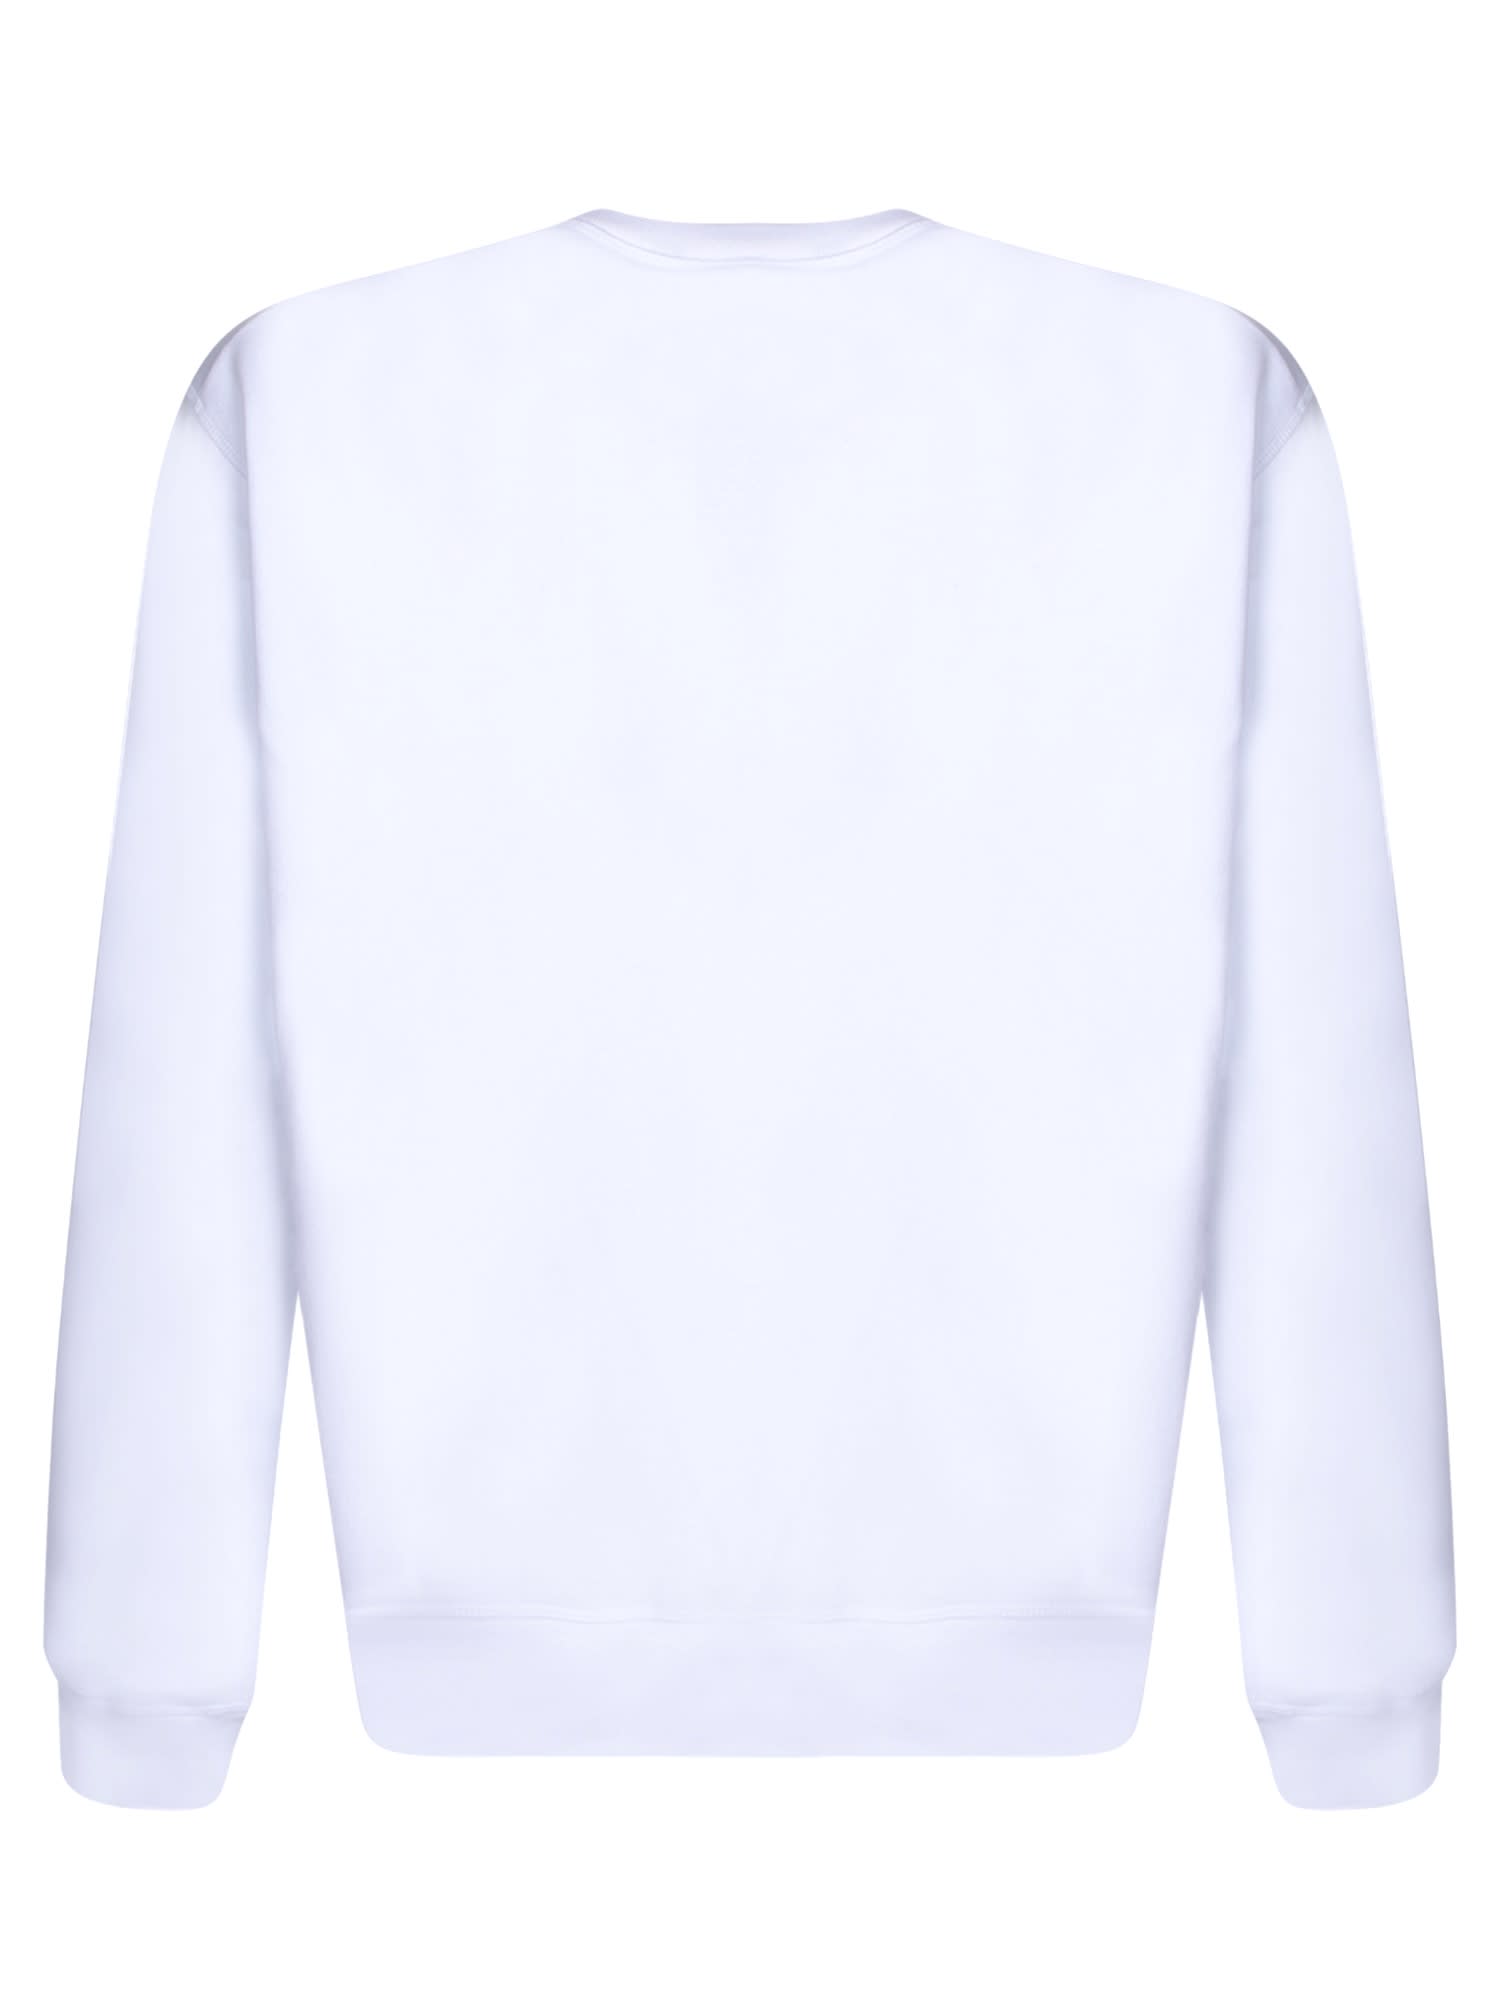 Shop Dsquared2 Cool Fit White Sweatshirt